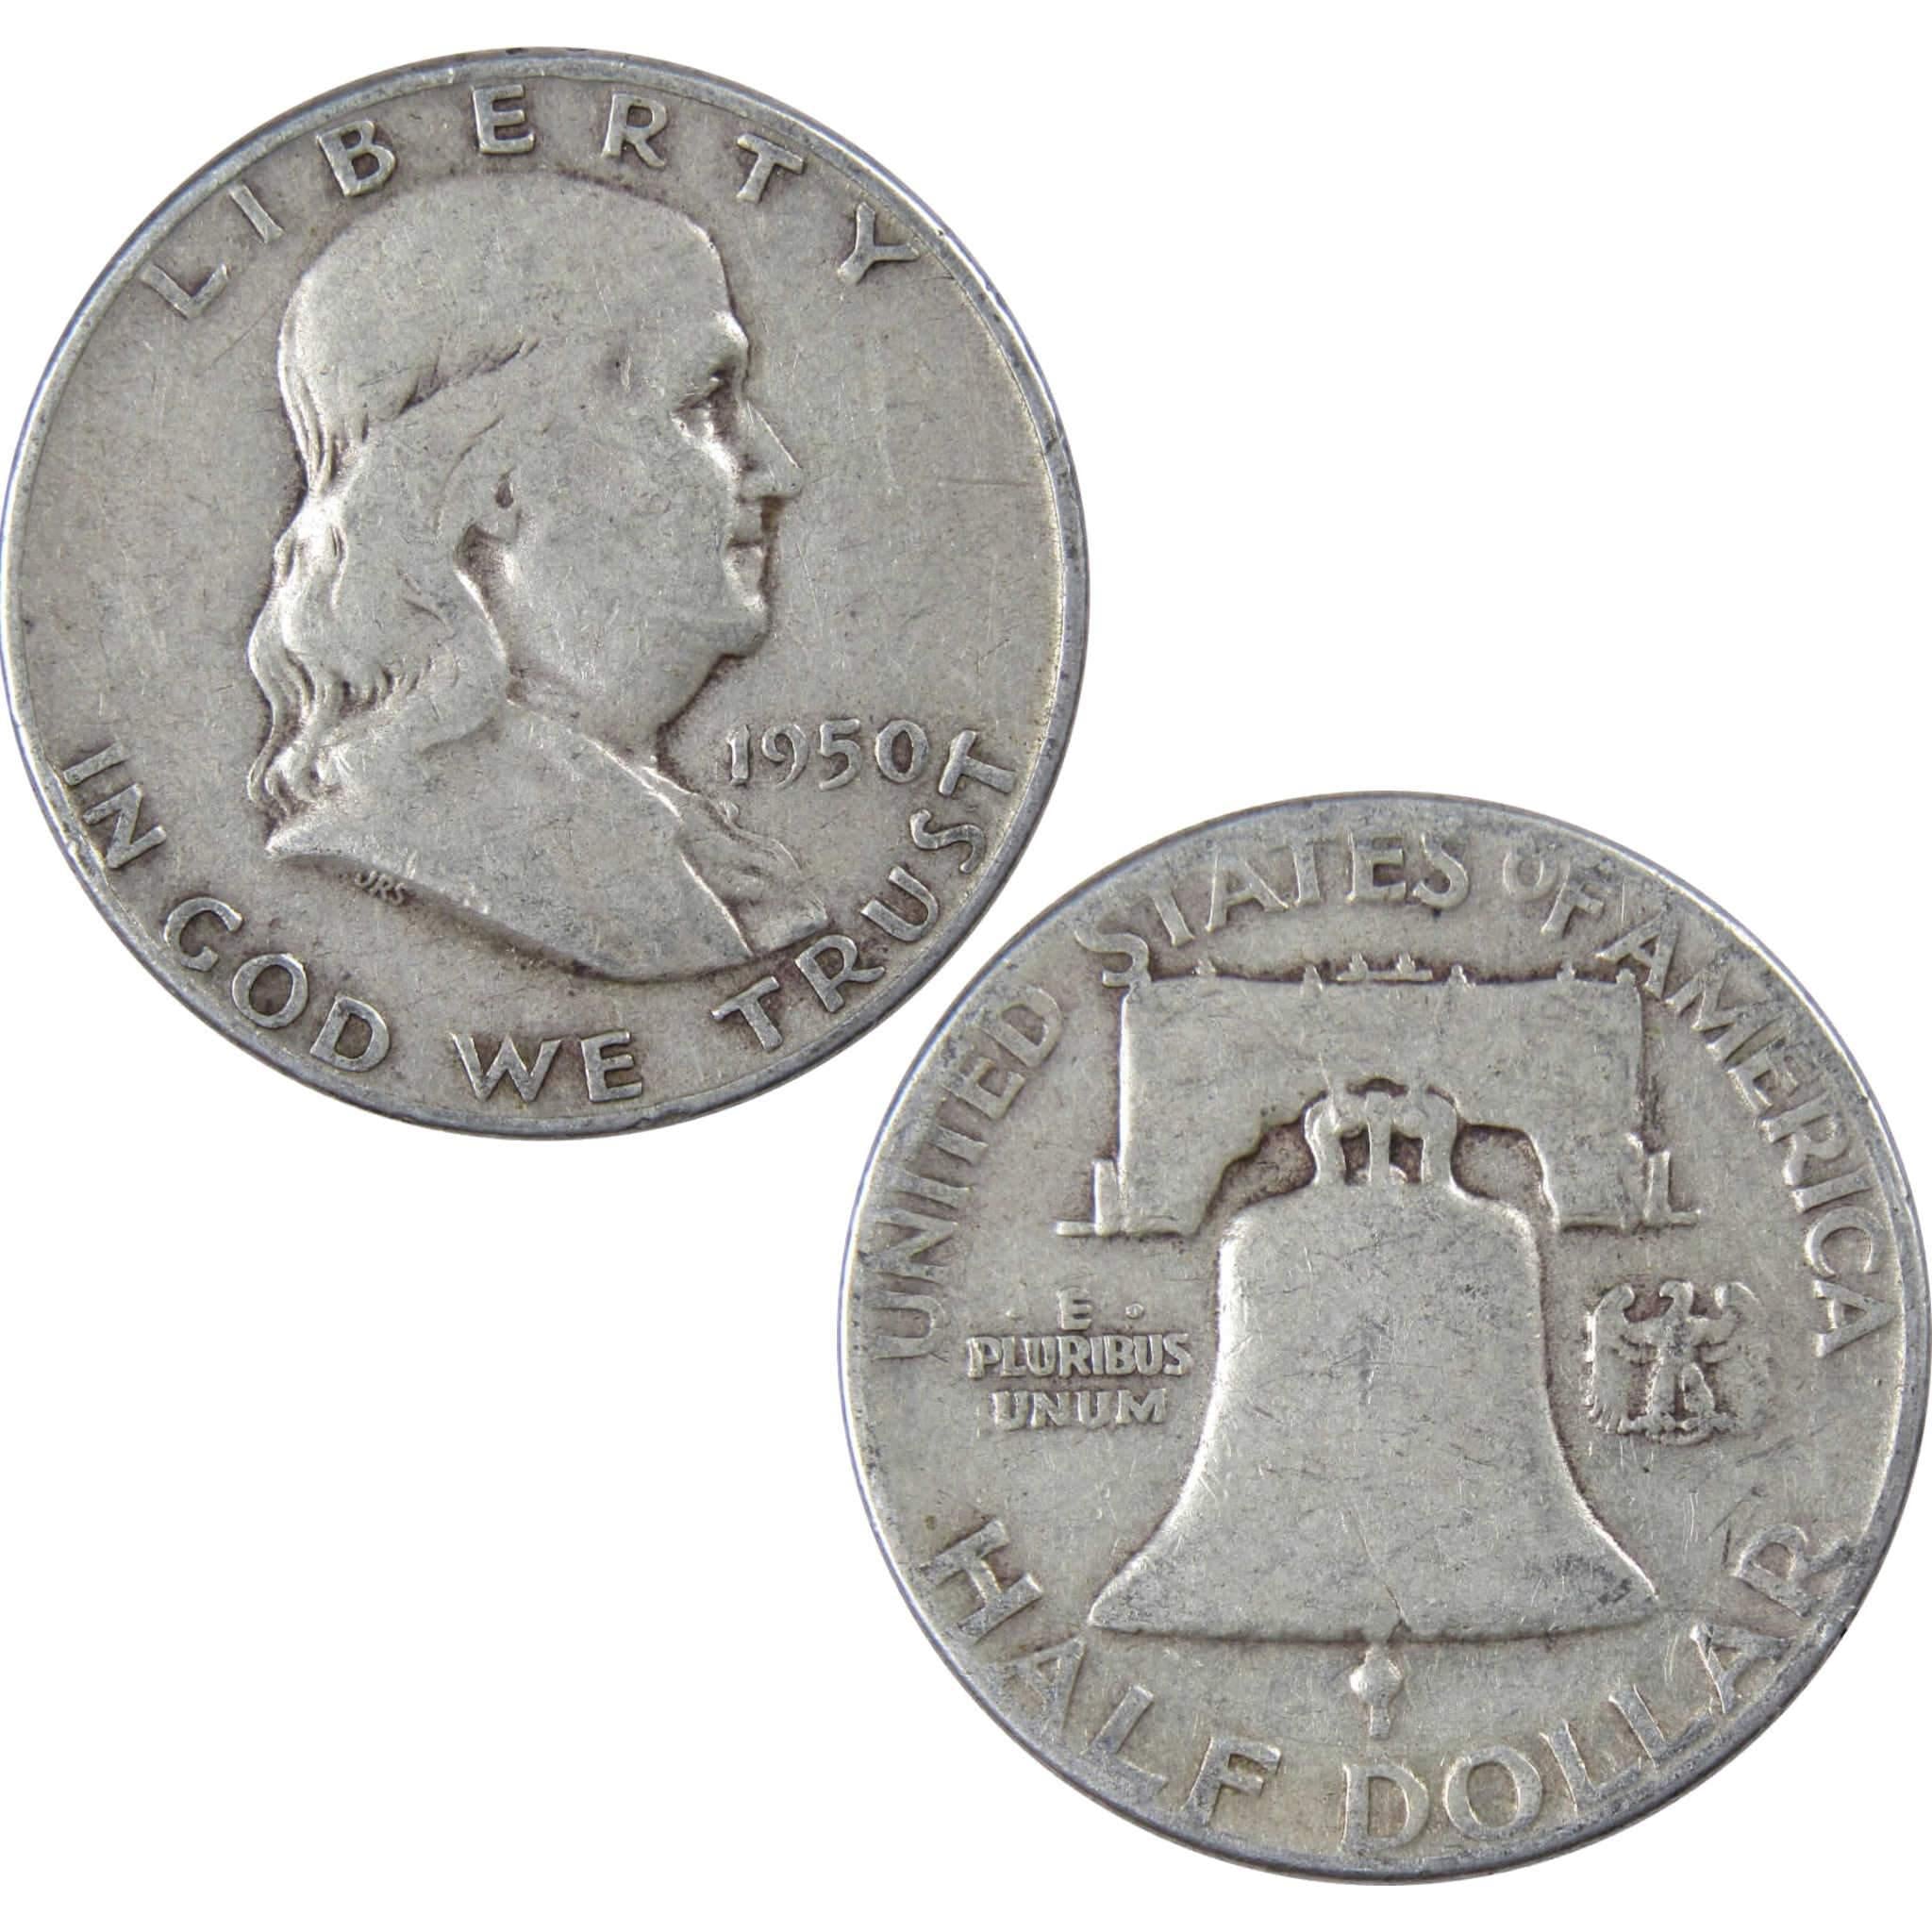 1950 Franklin Half Dollar VG Very Good 90% Silver 50c US Coin Collectible